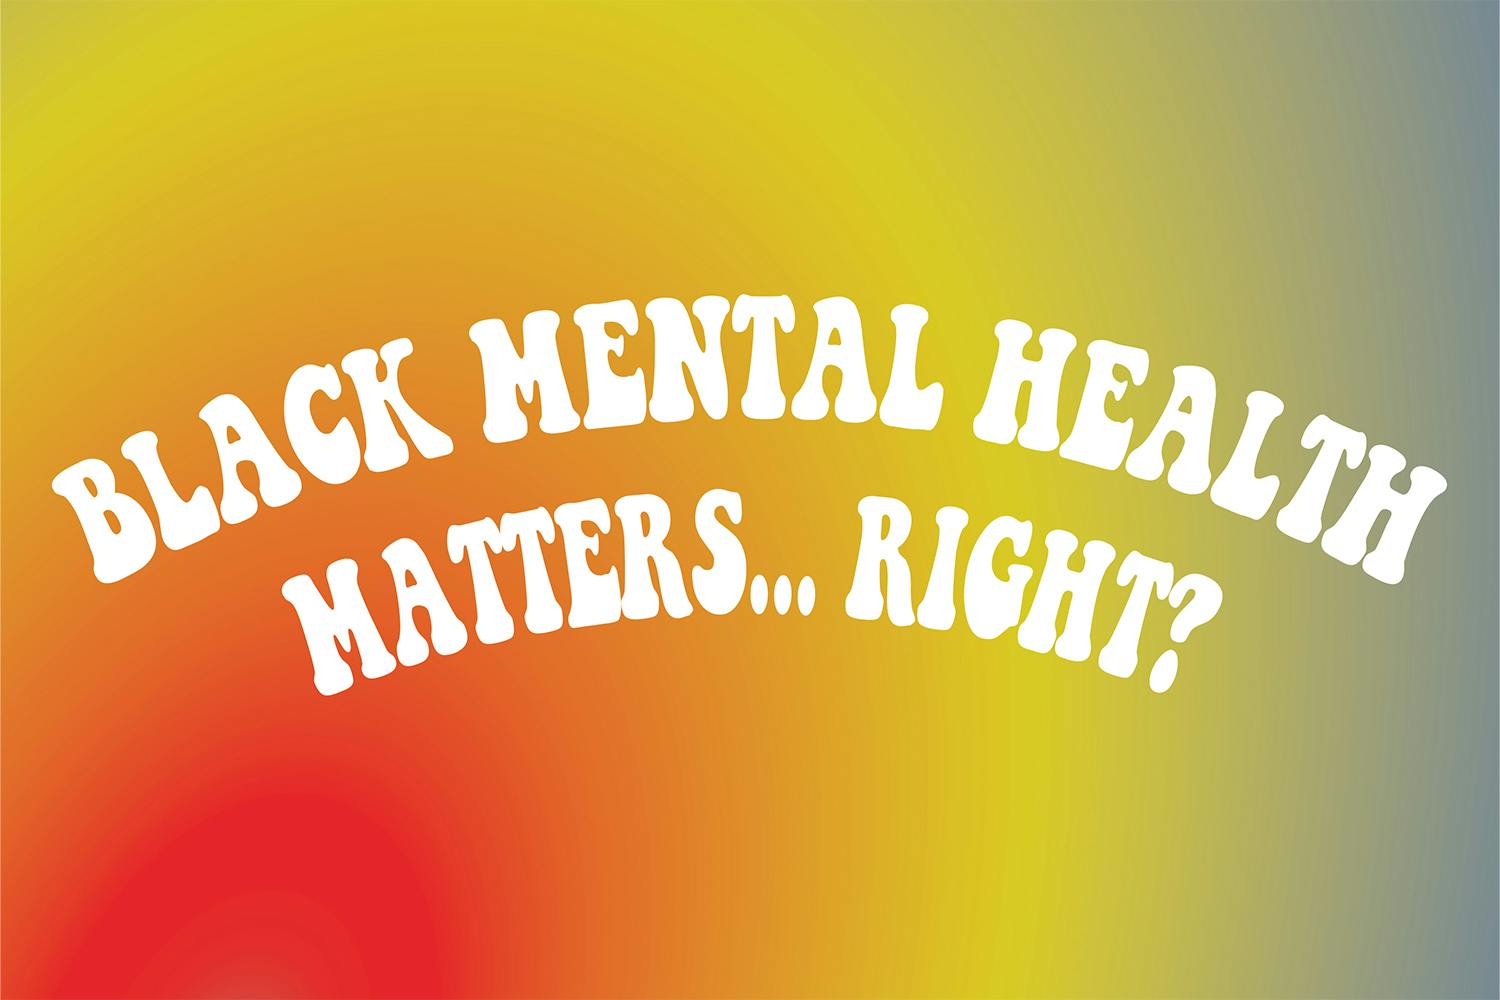 Black Mental Health Matters… Right?